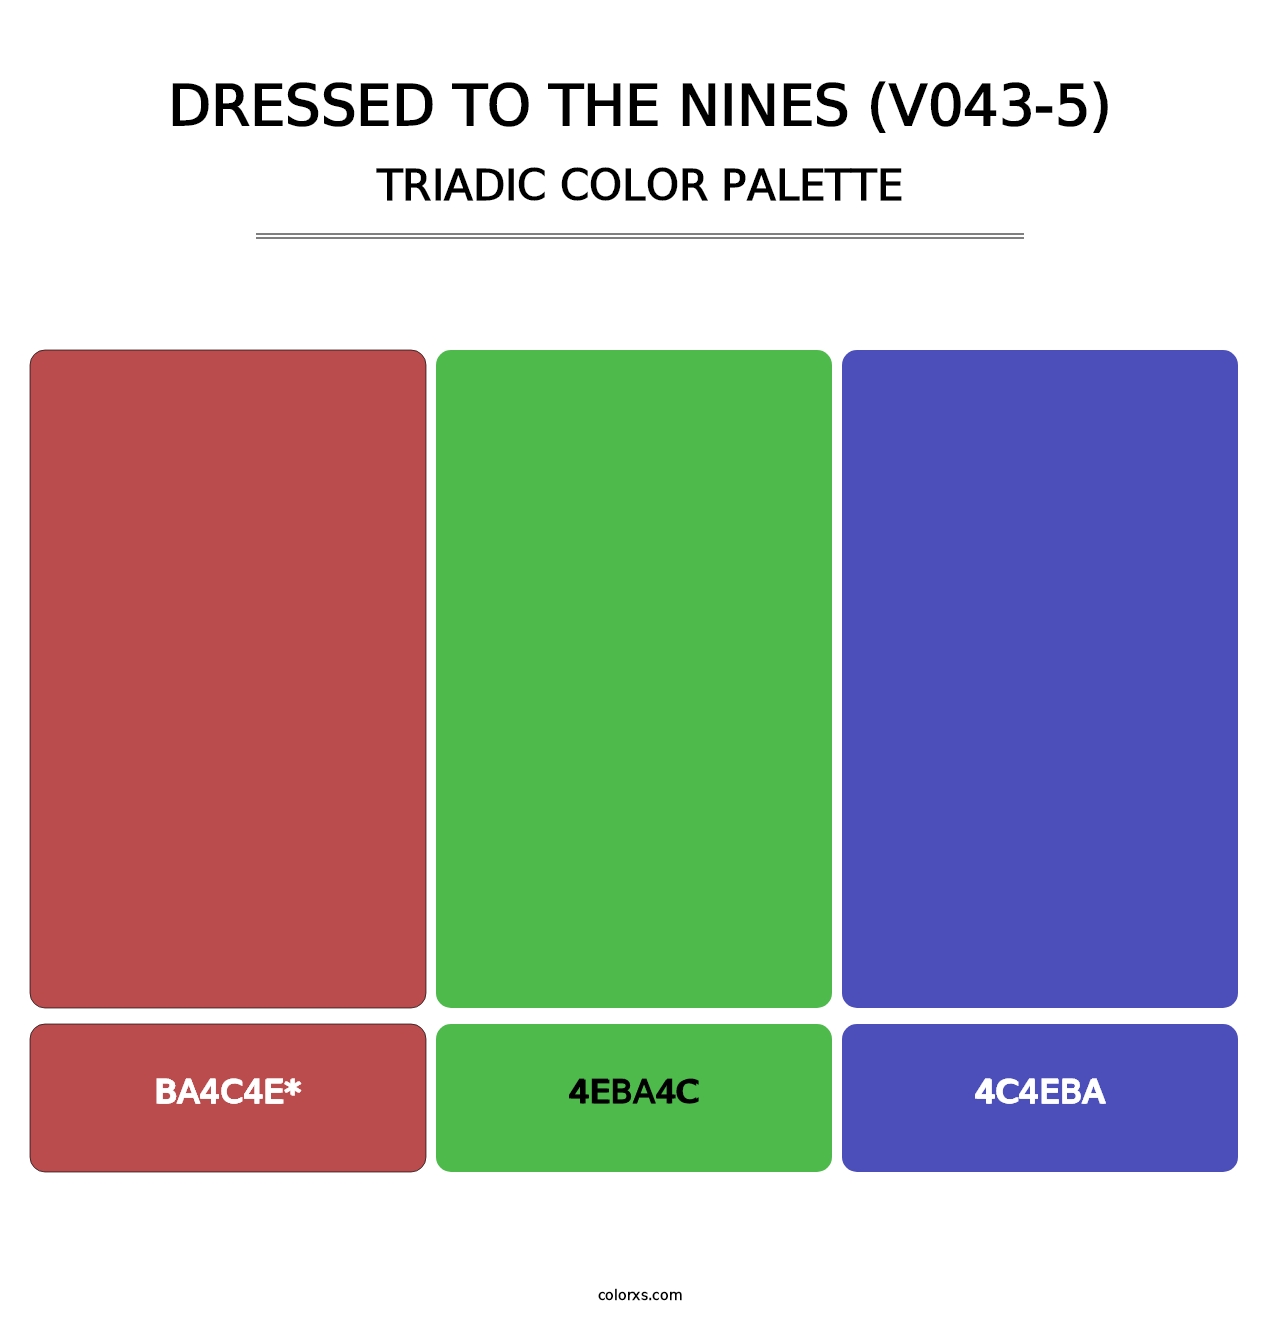 Dressed to the Nines (V043-5) - Triadic Color Palette